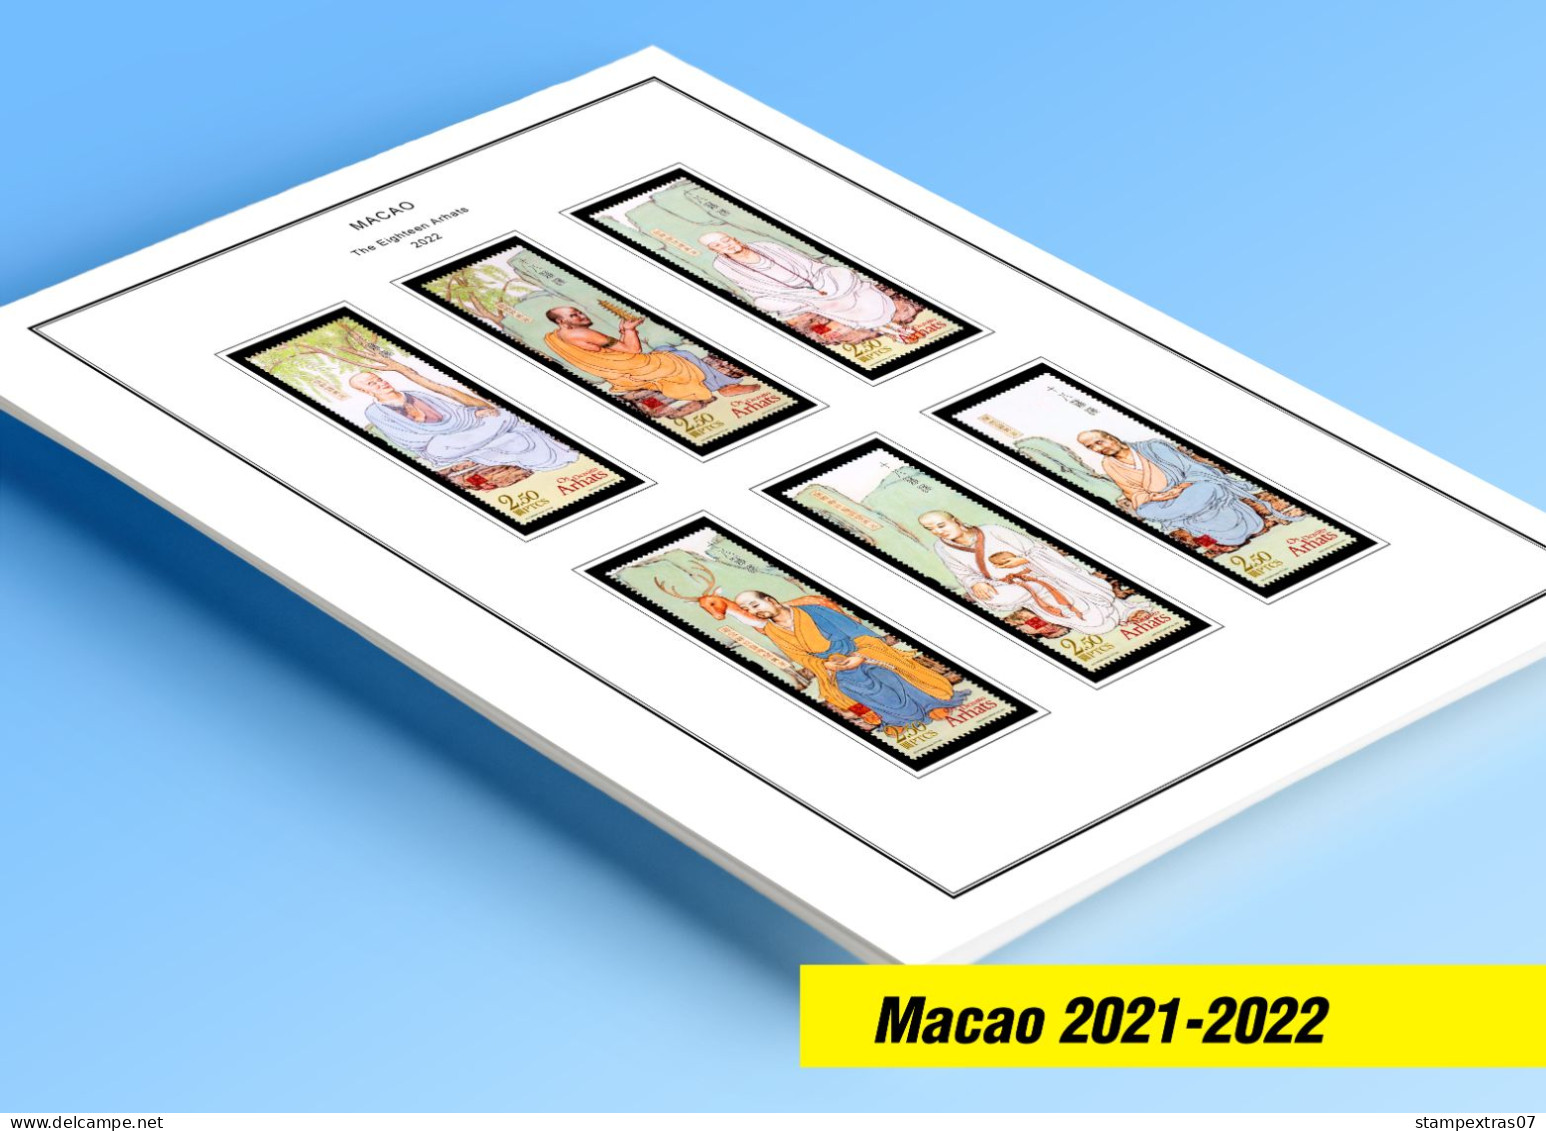 COLOR PRINTED MACAO [SAR] 2021-2022 STAMP ALBUM PAGES (33 Illustrated Pages) >> FEUILLES ALBUM - Vordruckblätter